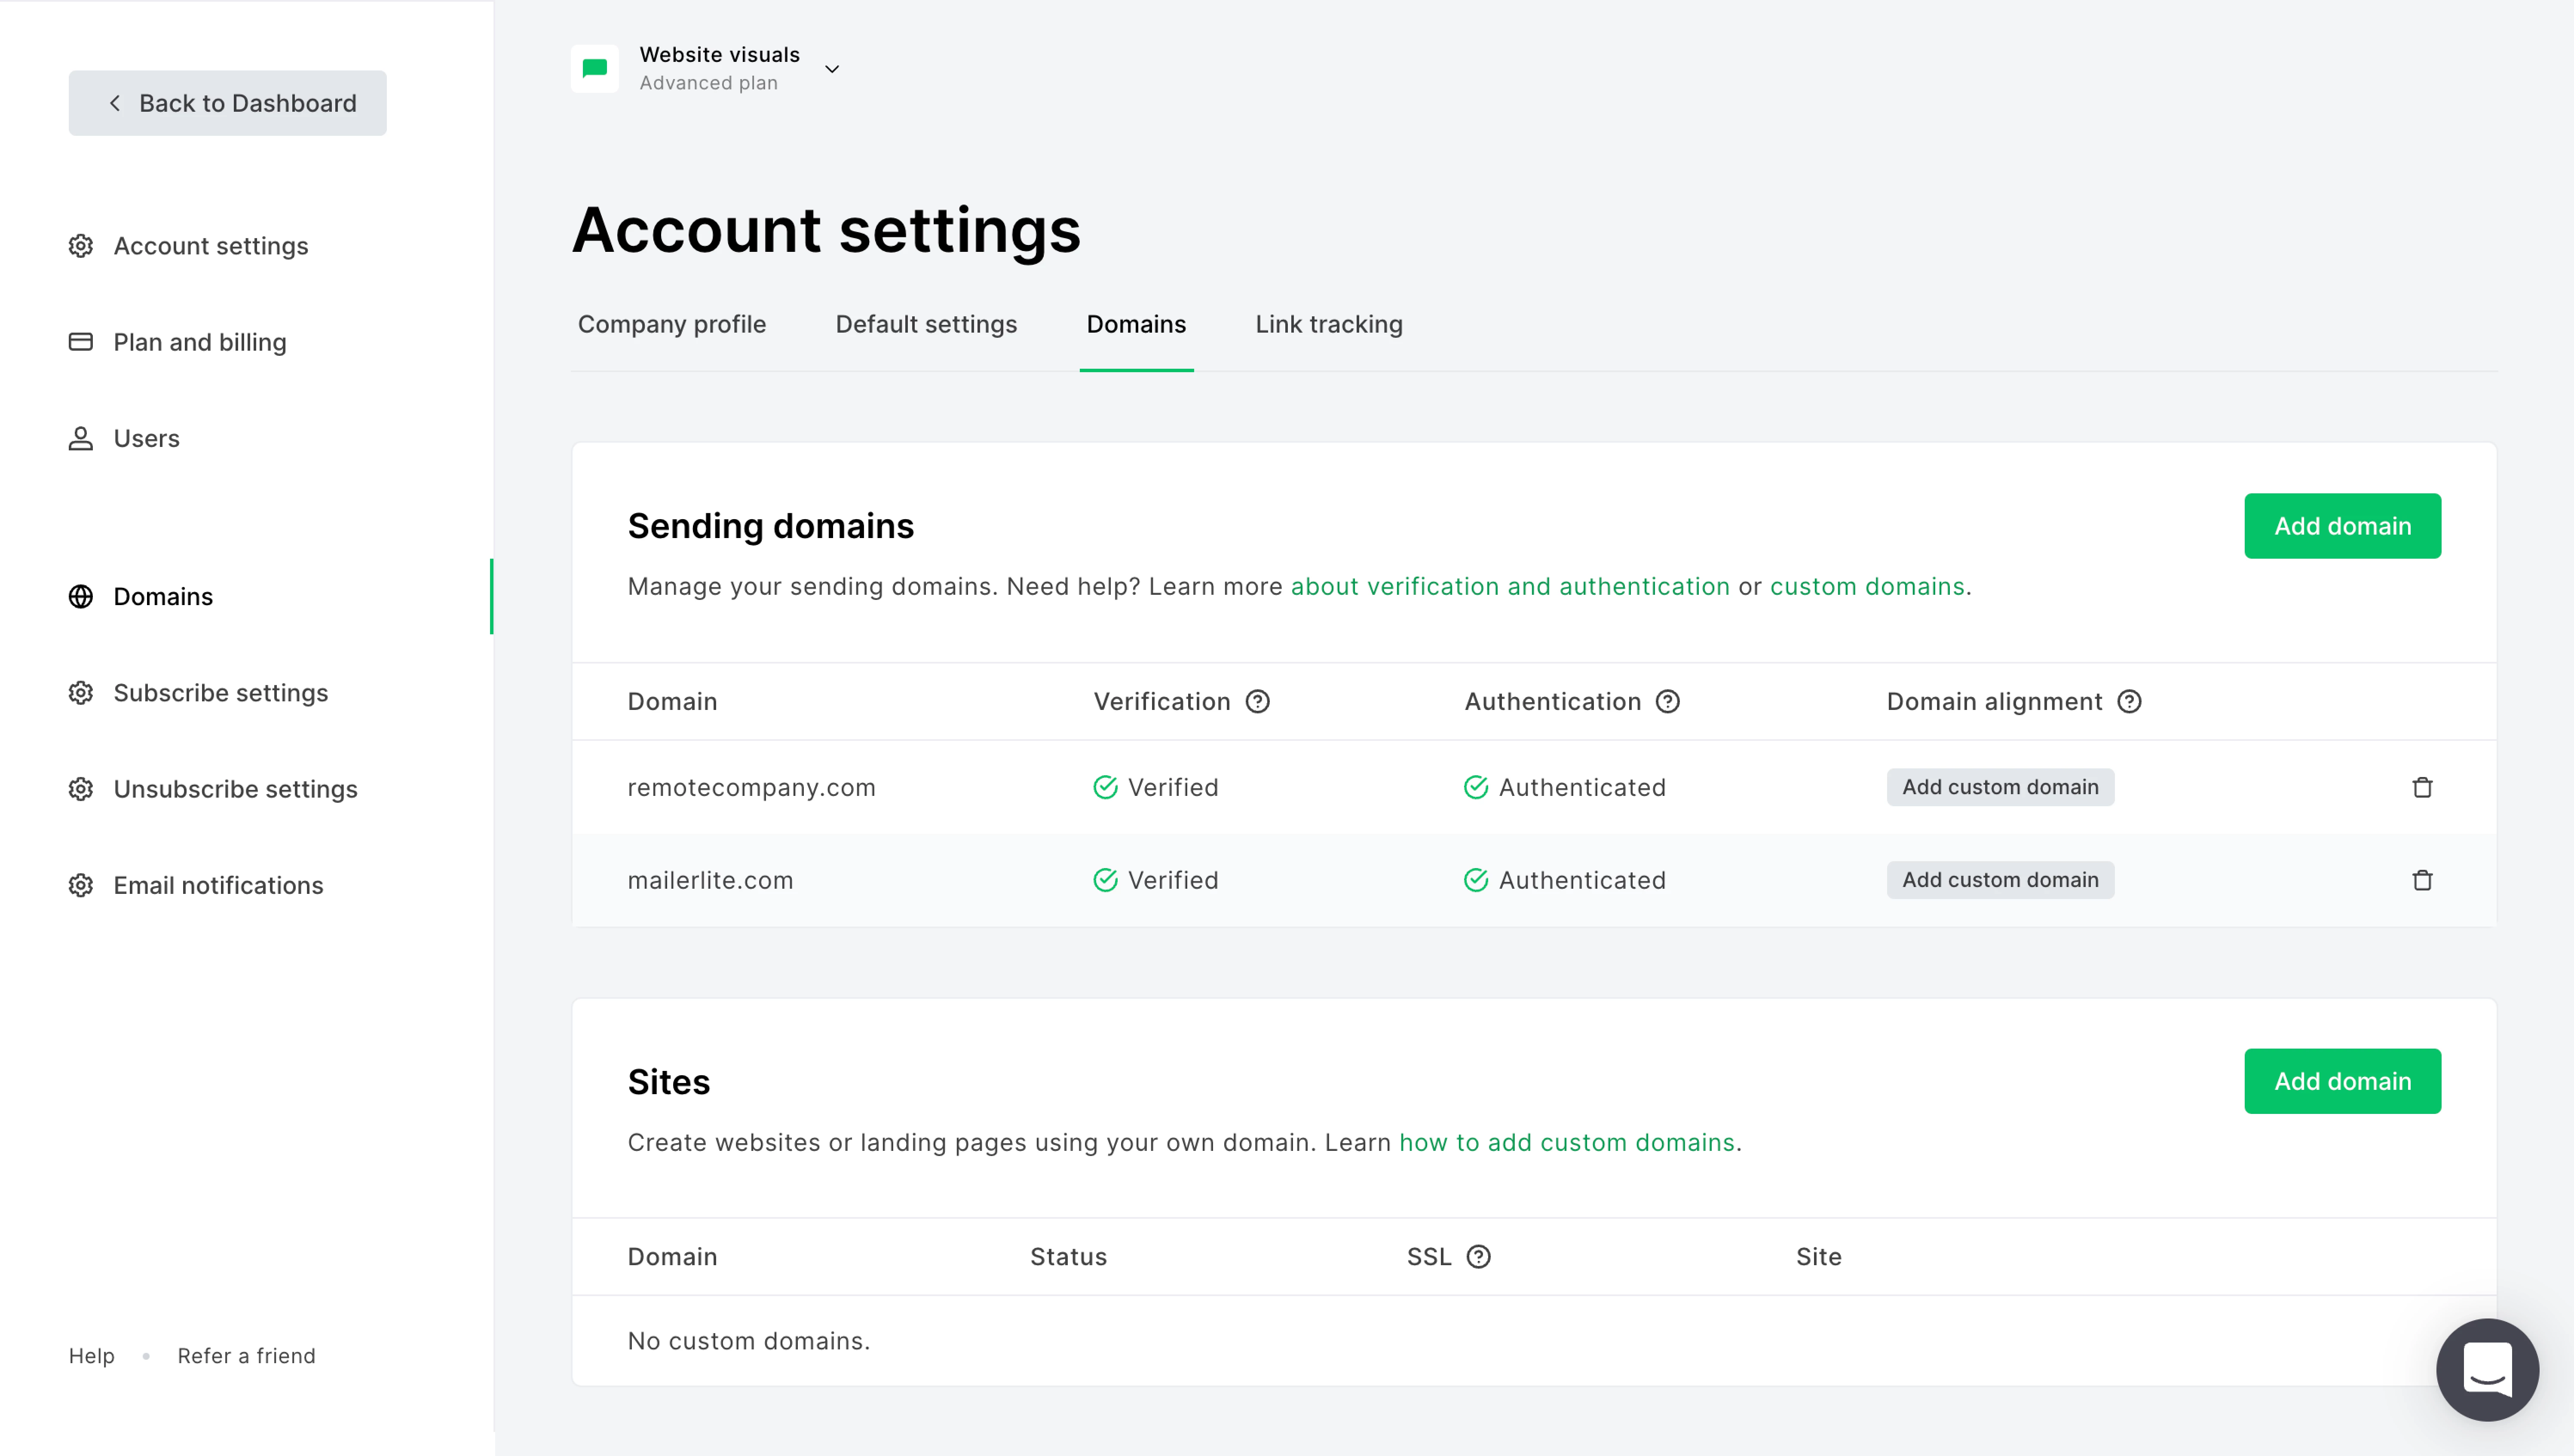 Domain alignment window in MailerLite account settings dashboard